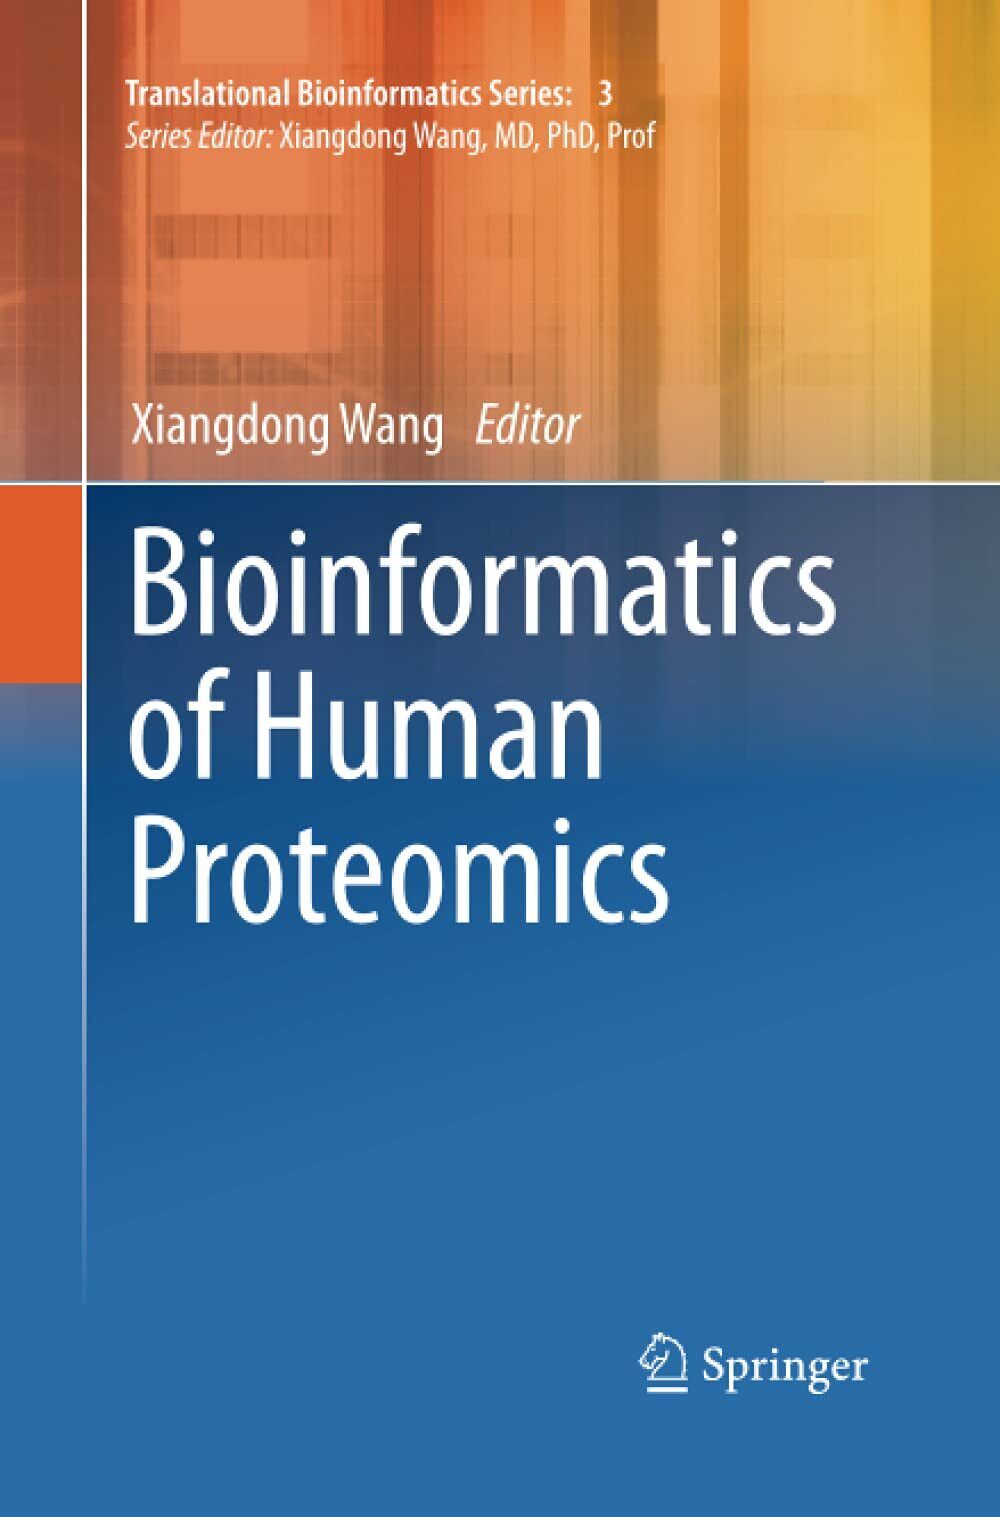 Bioinformatics of Human Proteomics - Xiangdong Wang - Springer, 2015